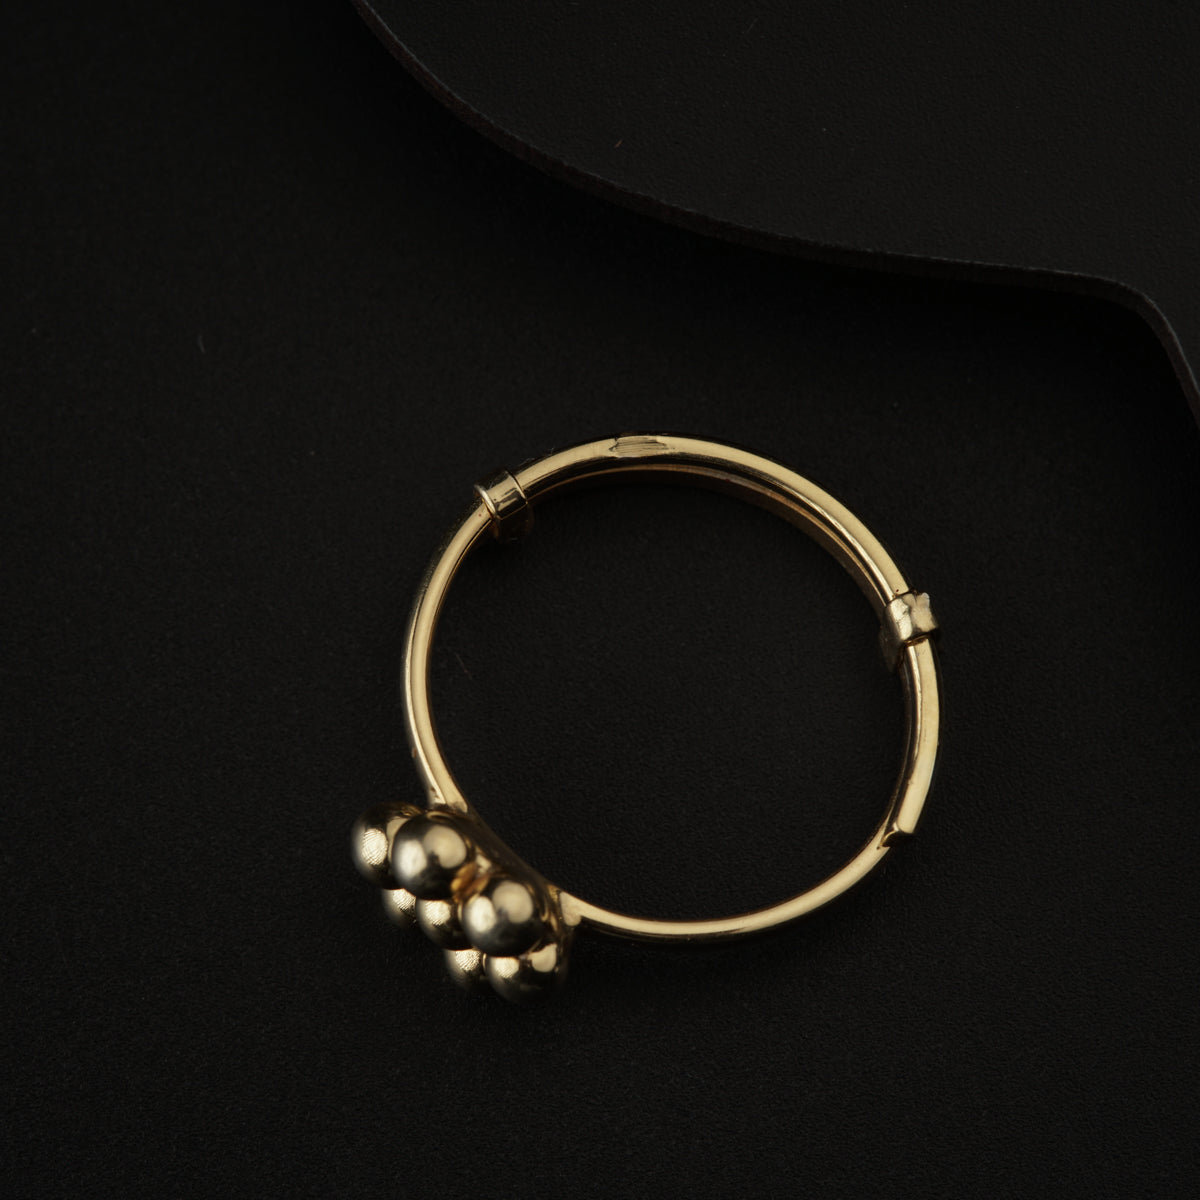 Kudi Ring: Small Gold Plated